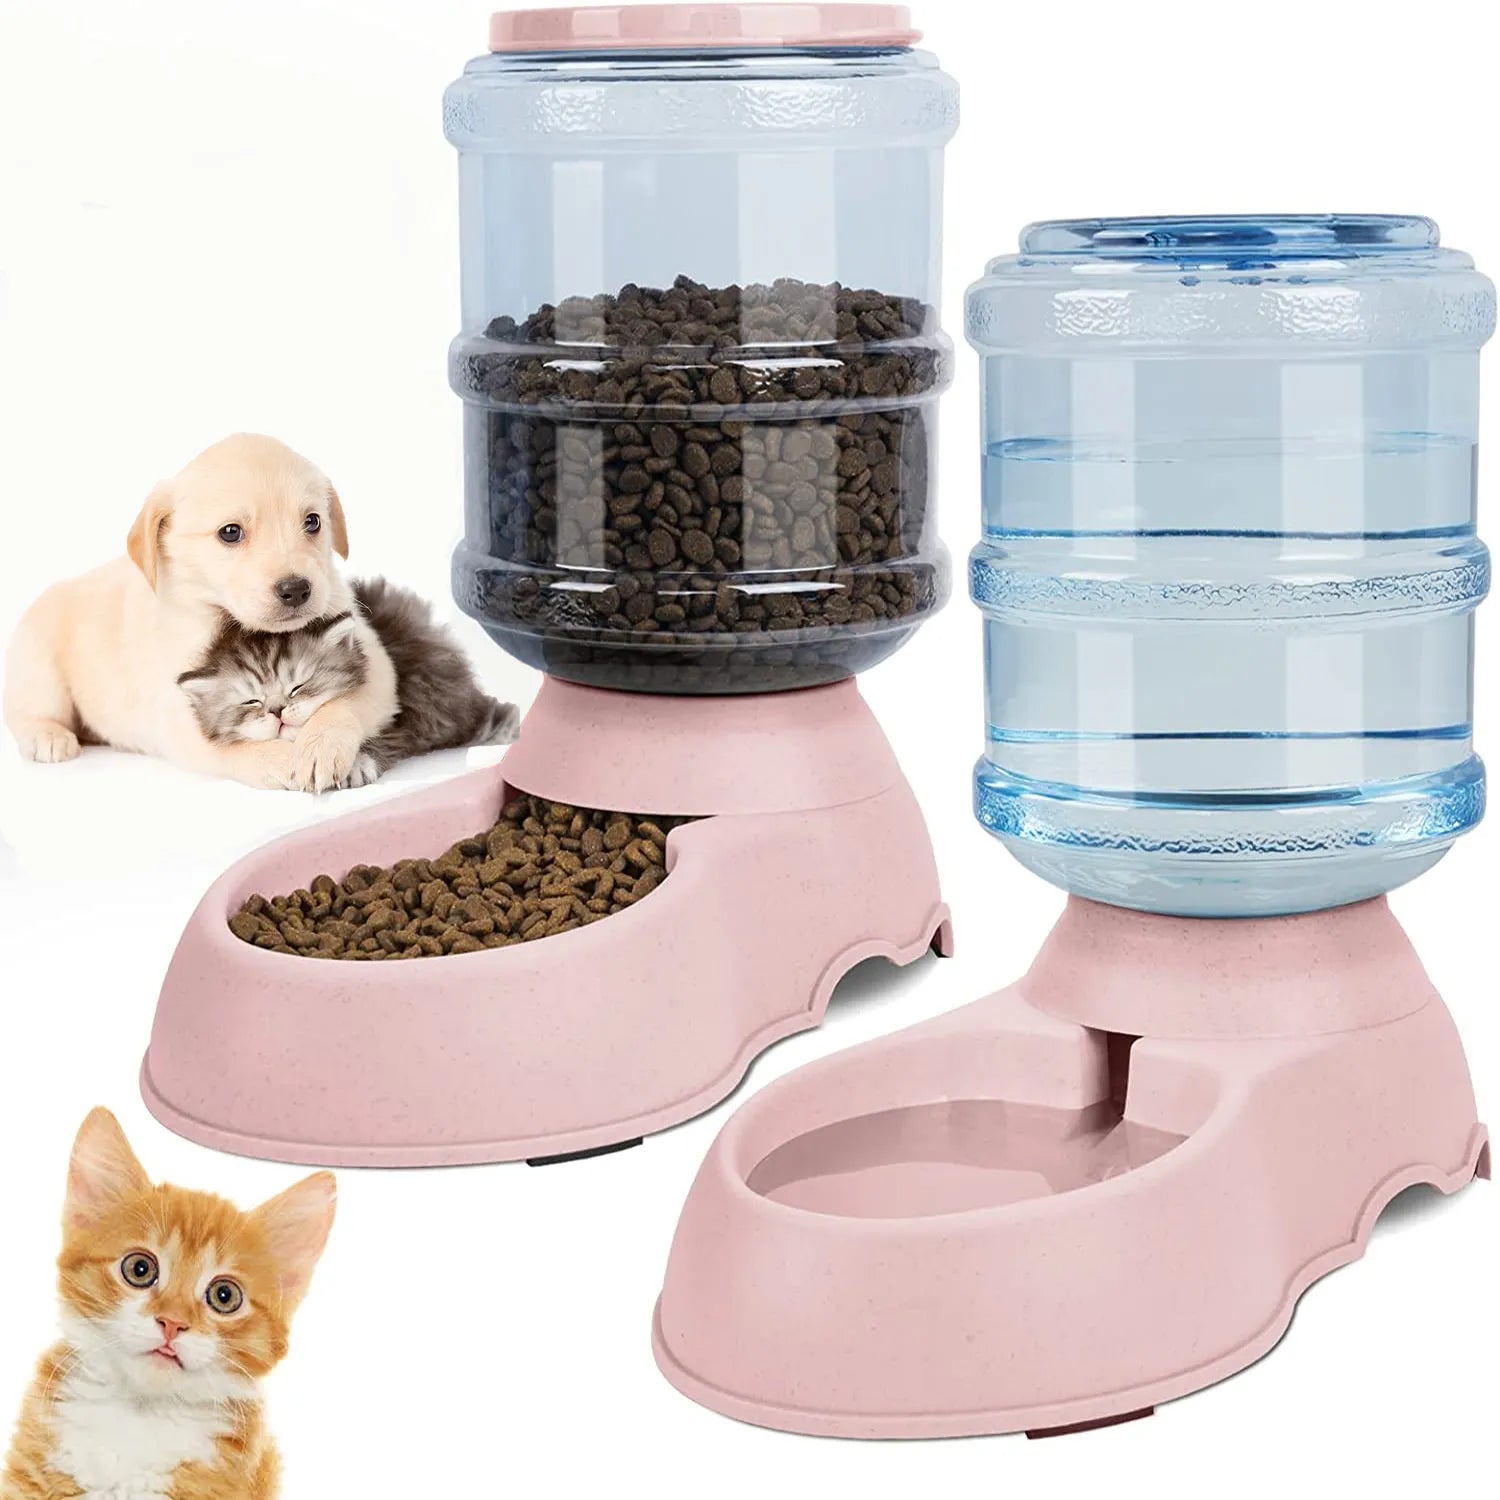 Water /food dispenser large capacity pet feeder